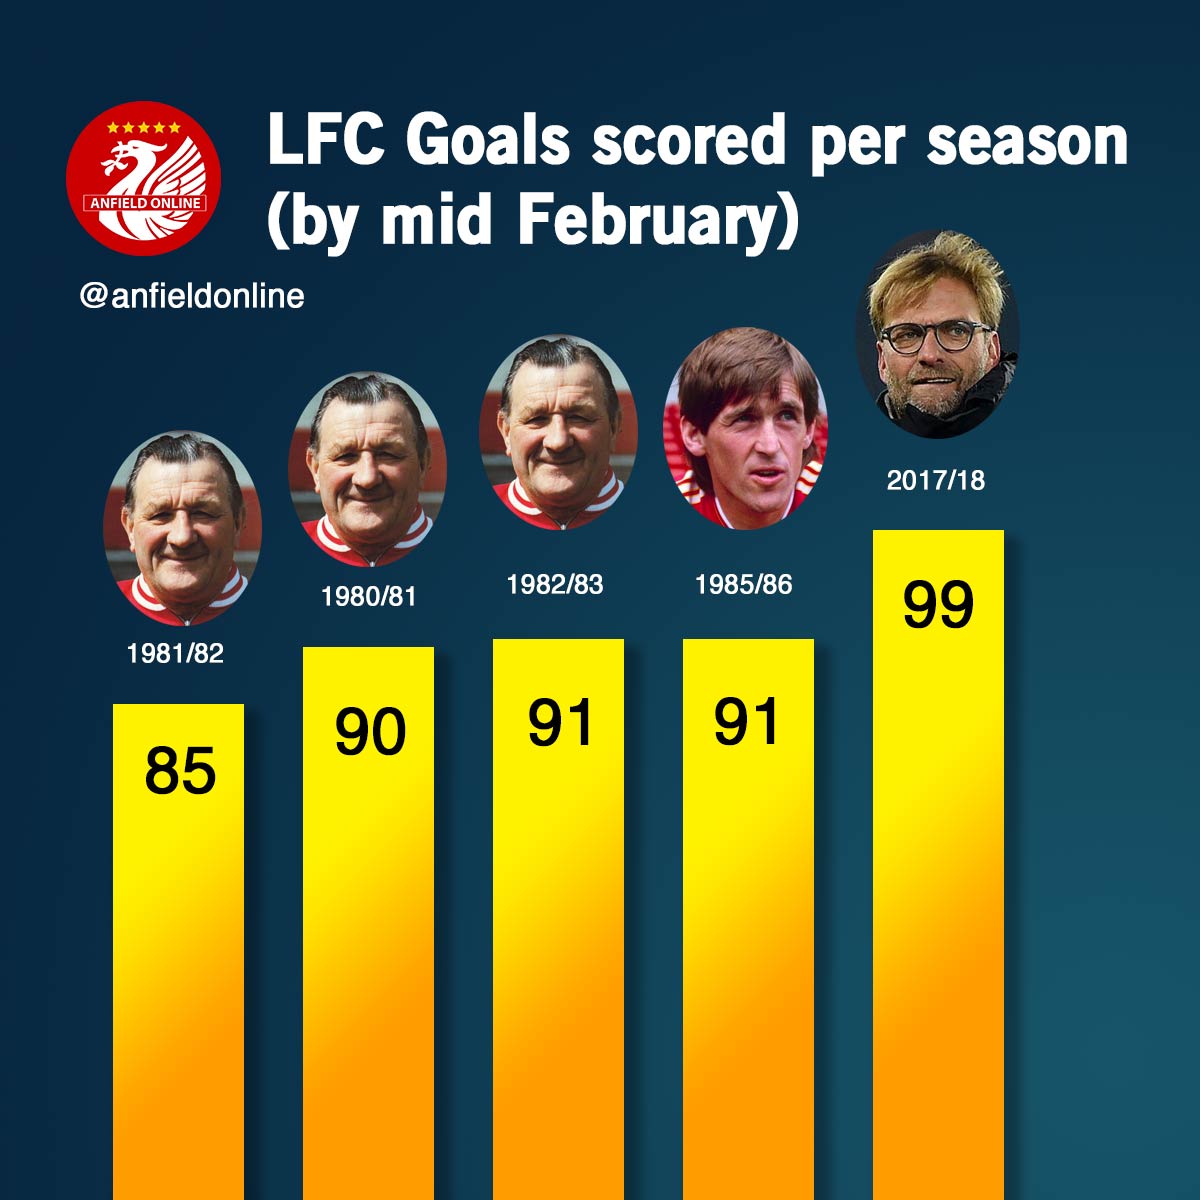 LFC reach 99 goals for the season